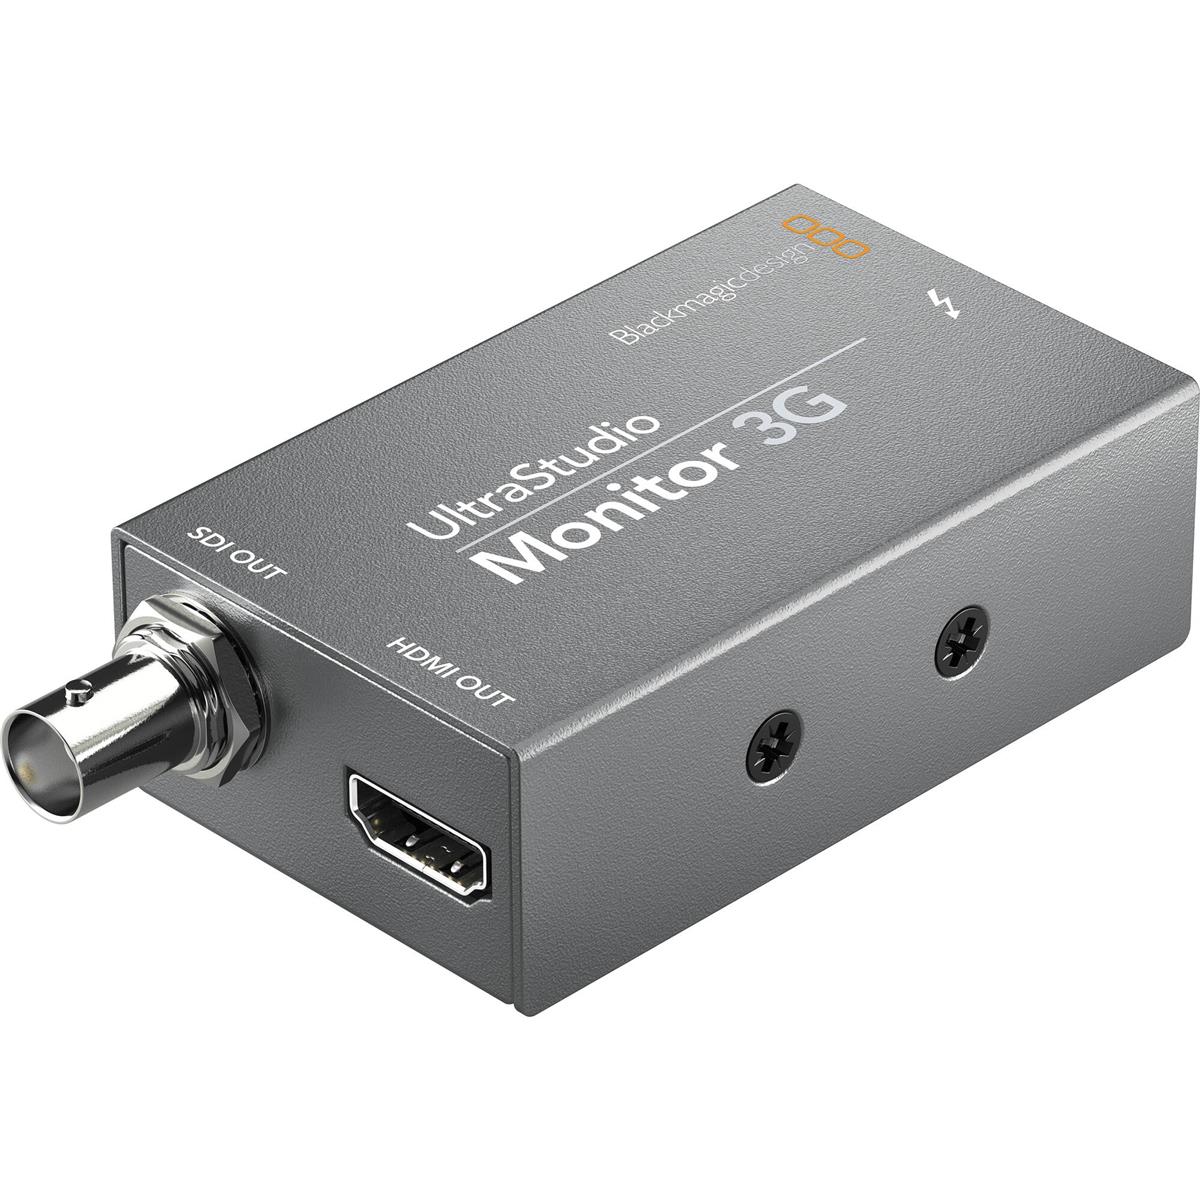 Image of Blackmagic Design UltraStudio Monitor 3G Playback Device with Thunderbolt 3